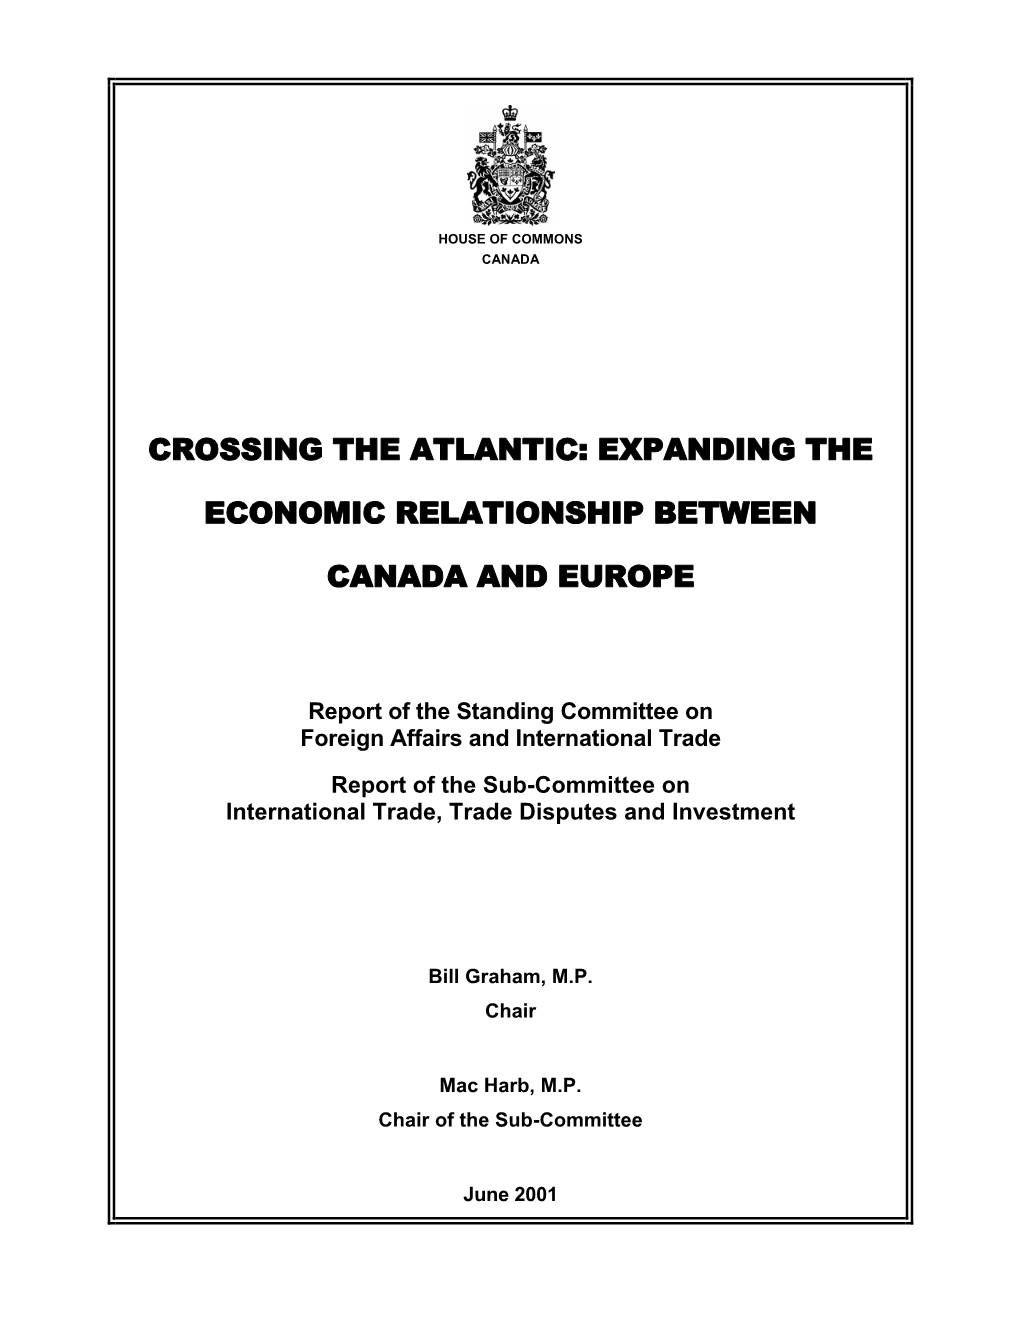 Expanding the Economic Relationship Between